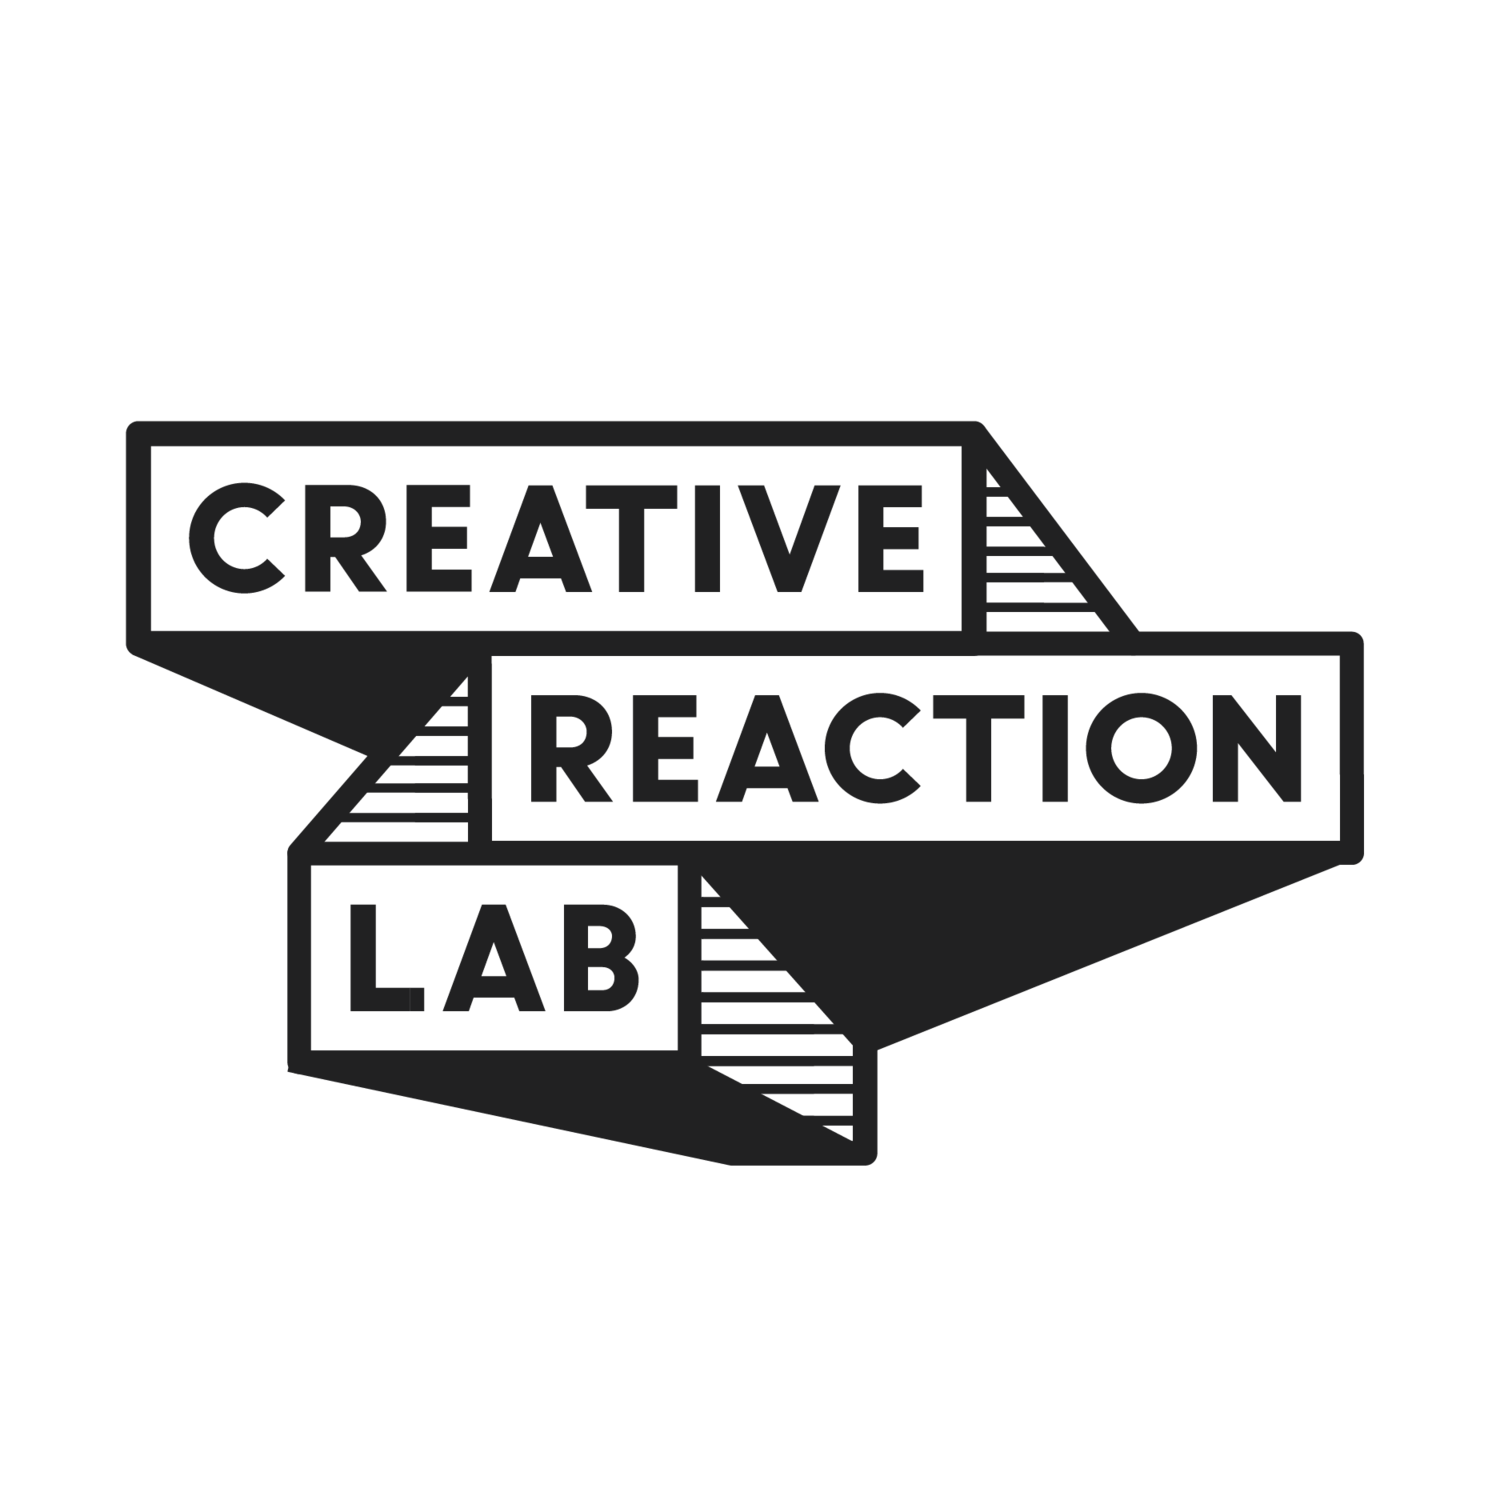 Creative Reaction Lab (CRXLAB)